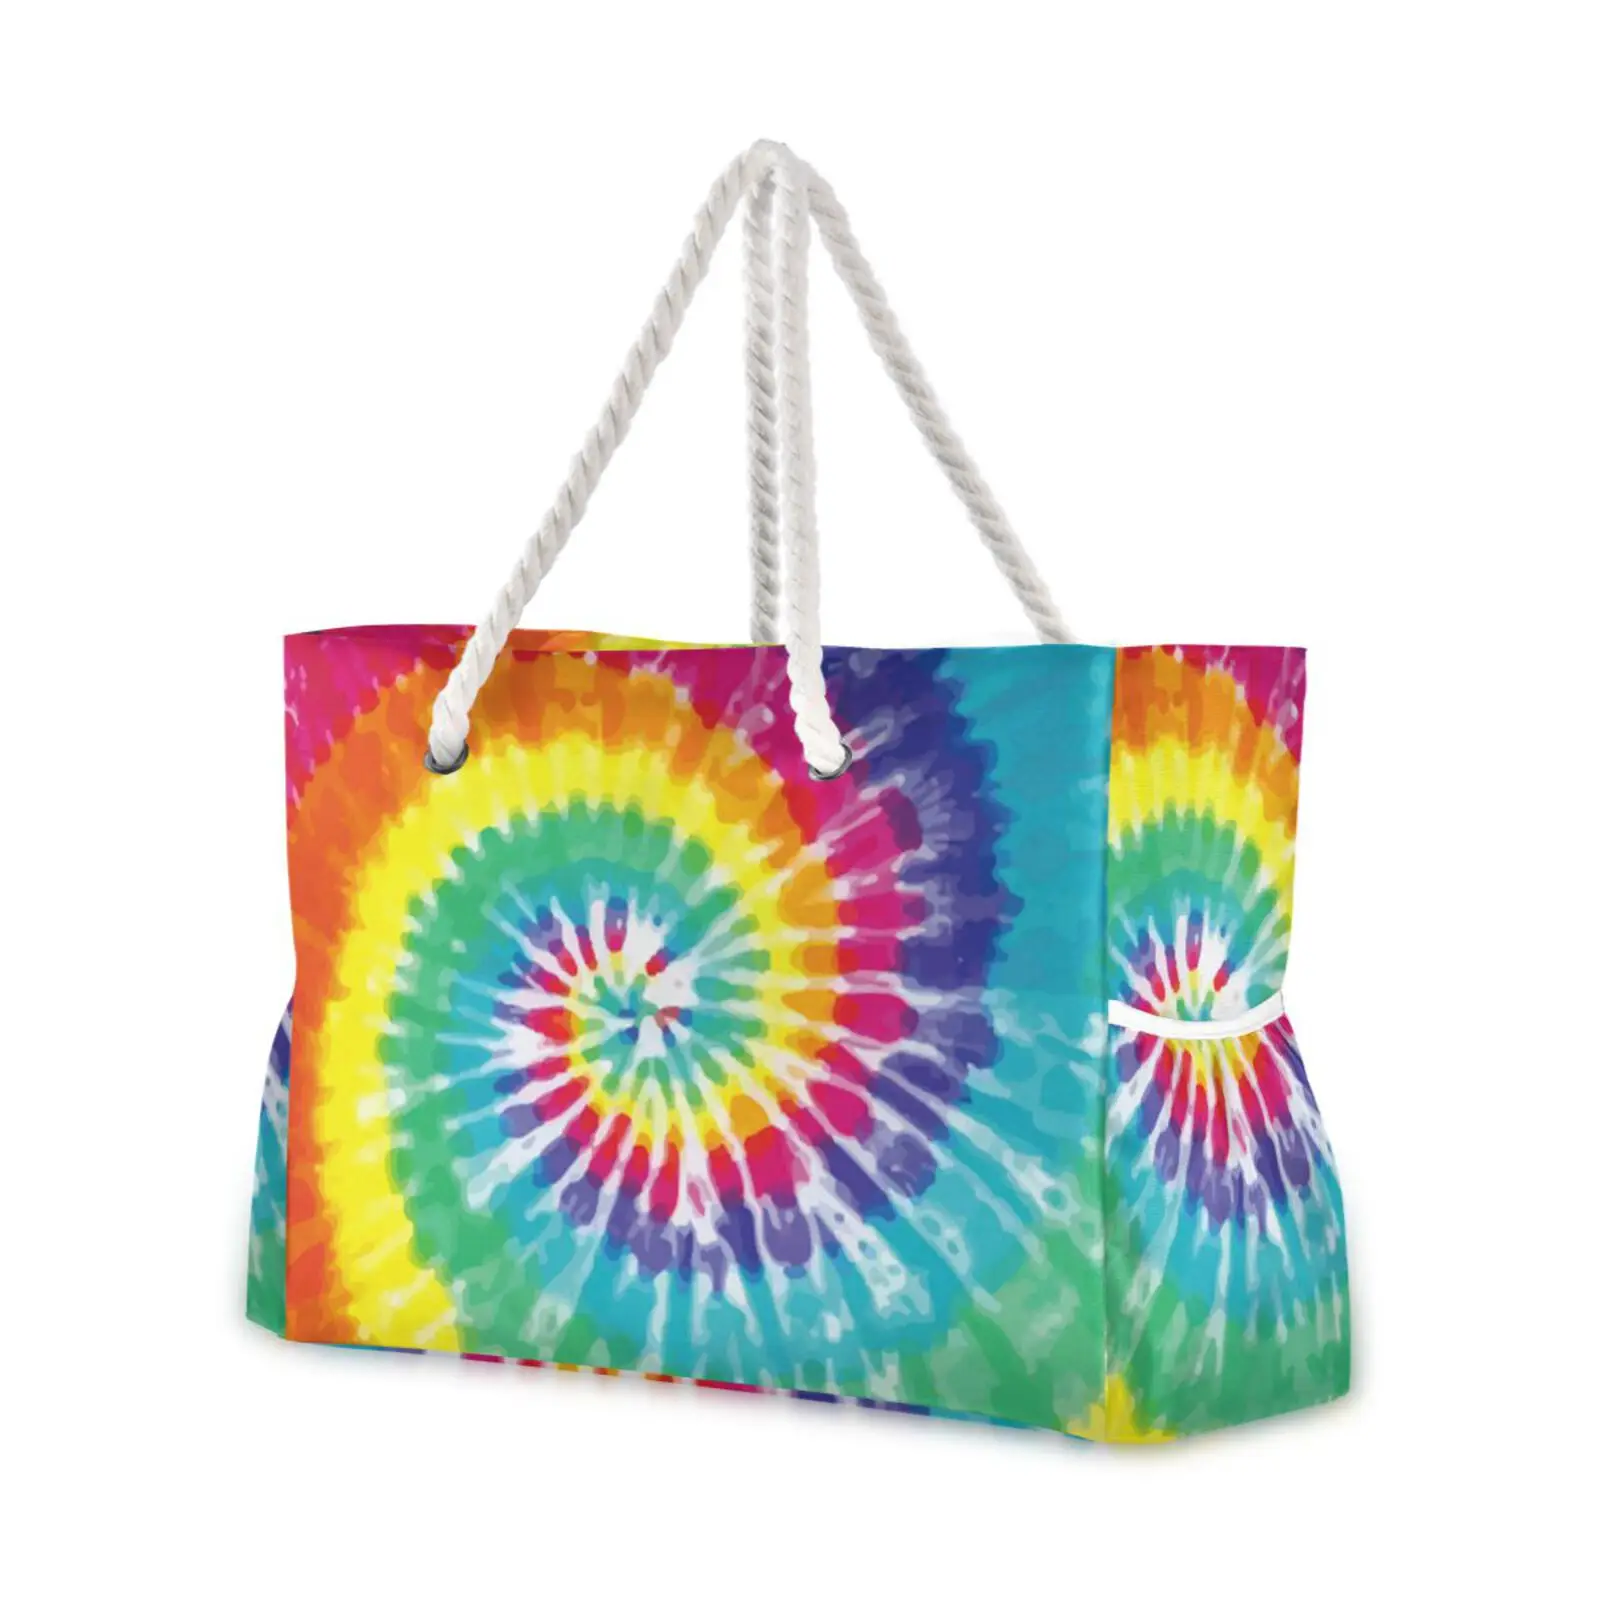 

Luxury Designe Handbags Tote Beach Bag Shopper Shoulder Bag Large Capacity Rainbow Tie Dye Swirl Travel Women's Bag 2022 Tend